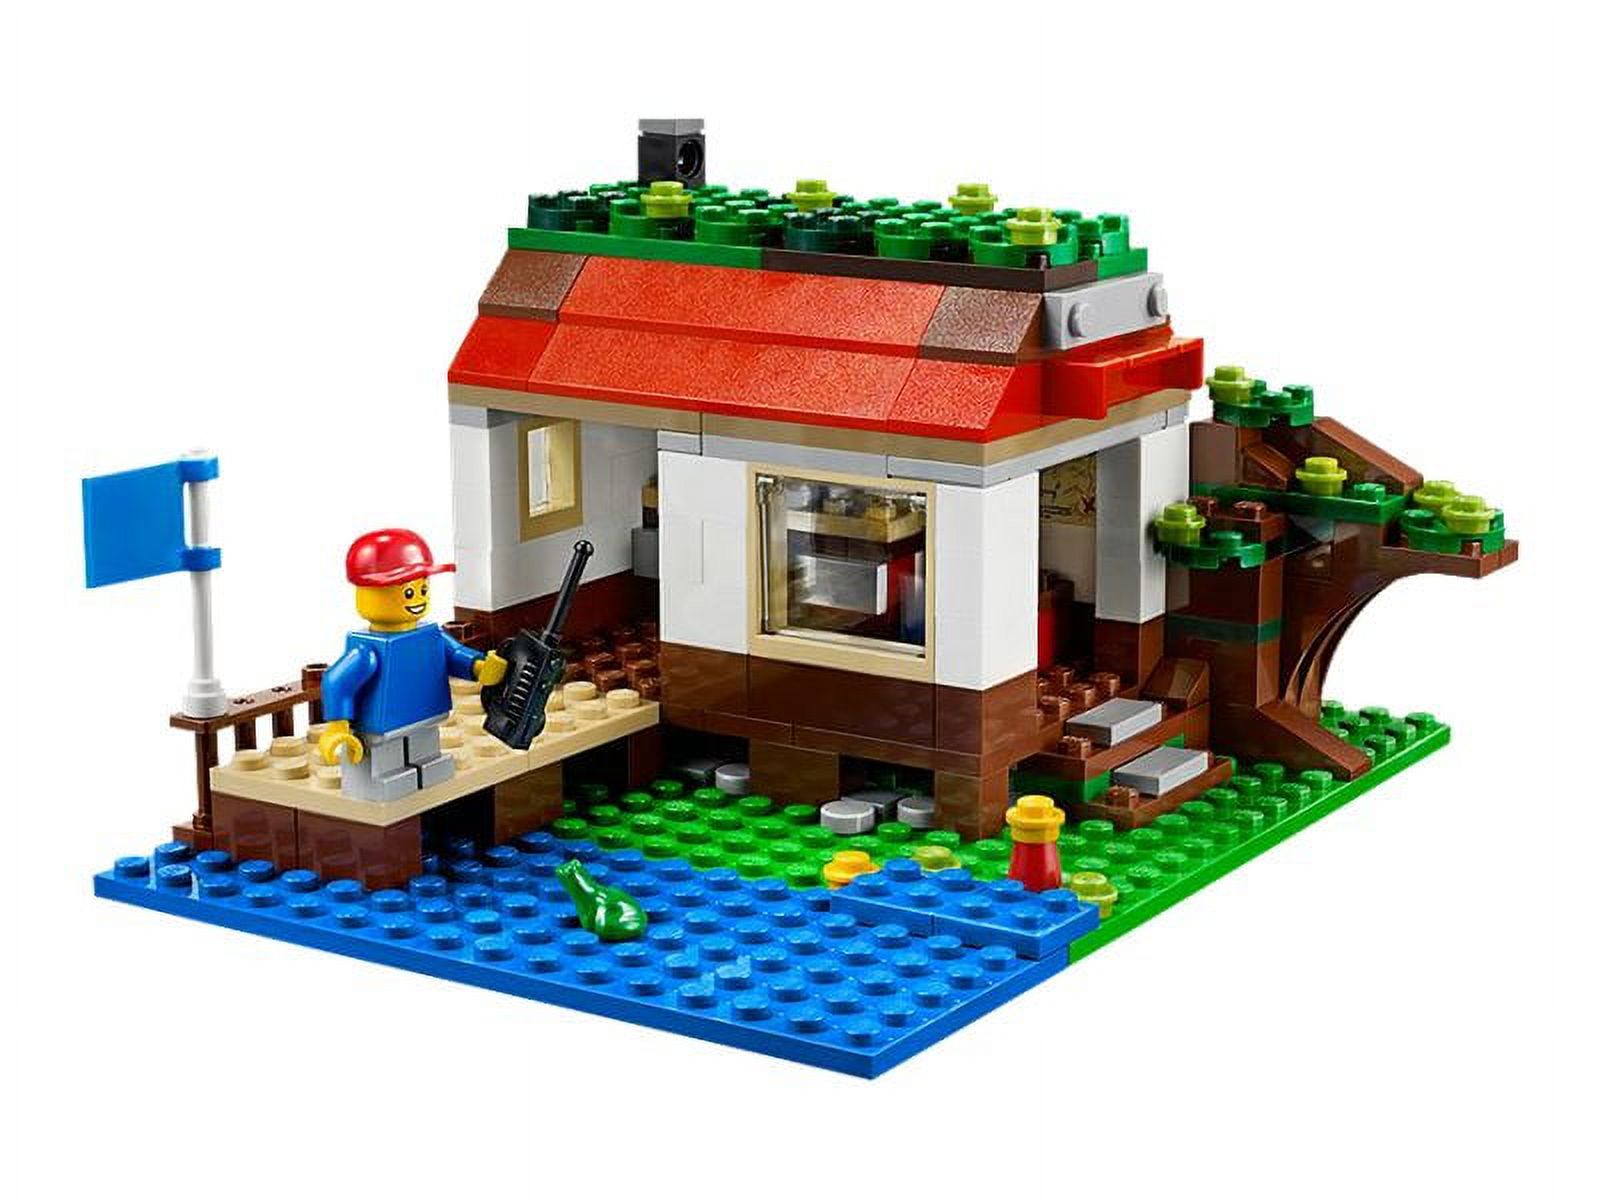 LEGO Creator 31010 - Tree House - image 4 of 4